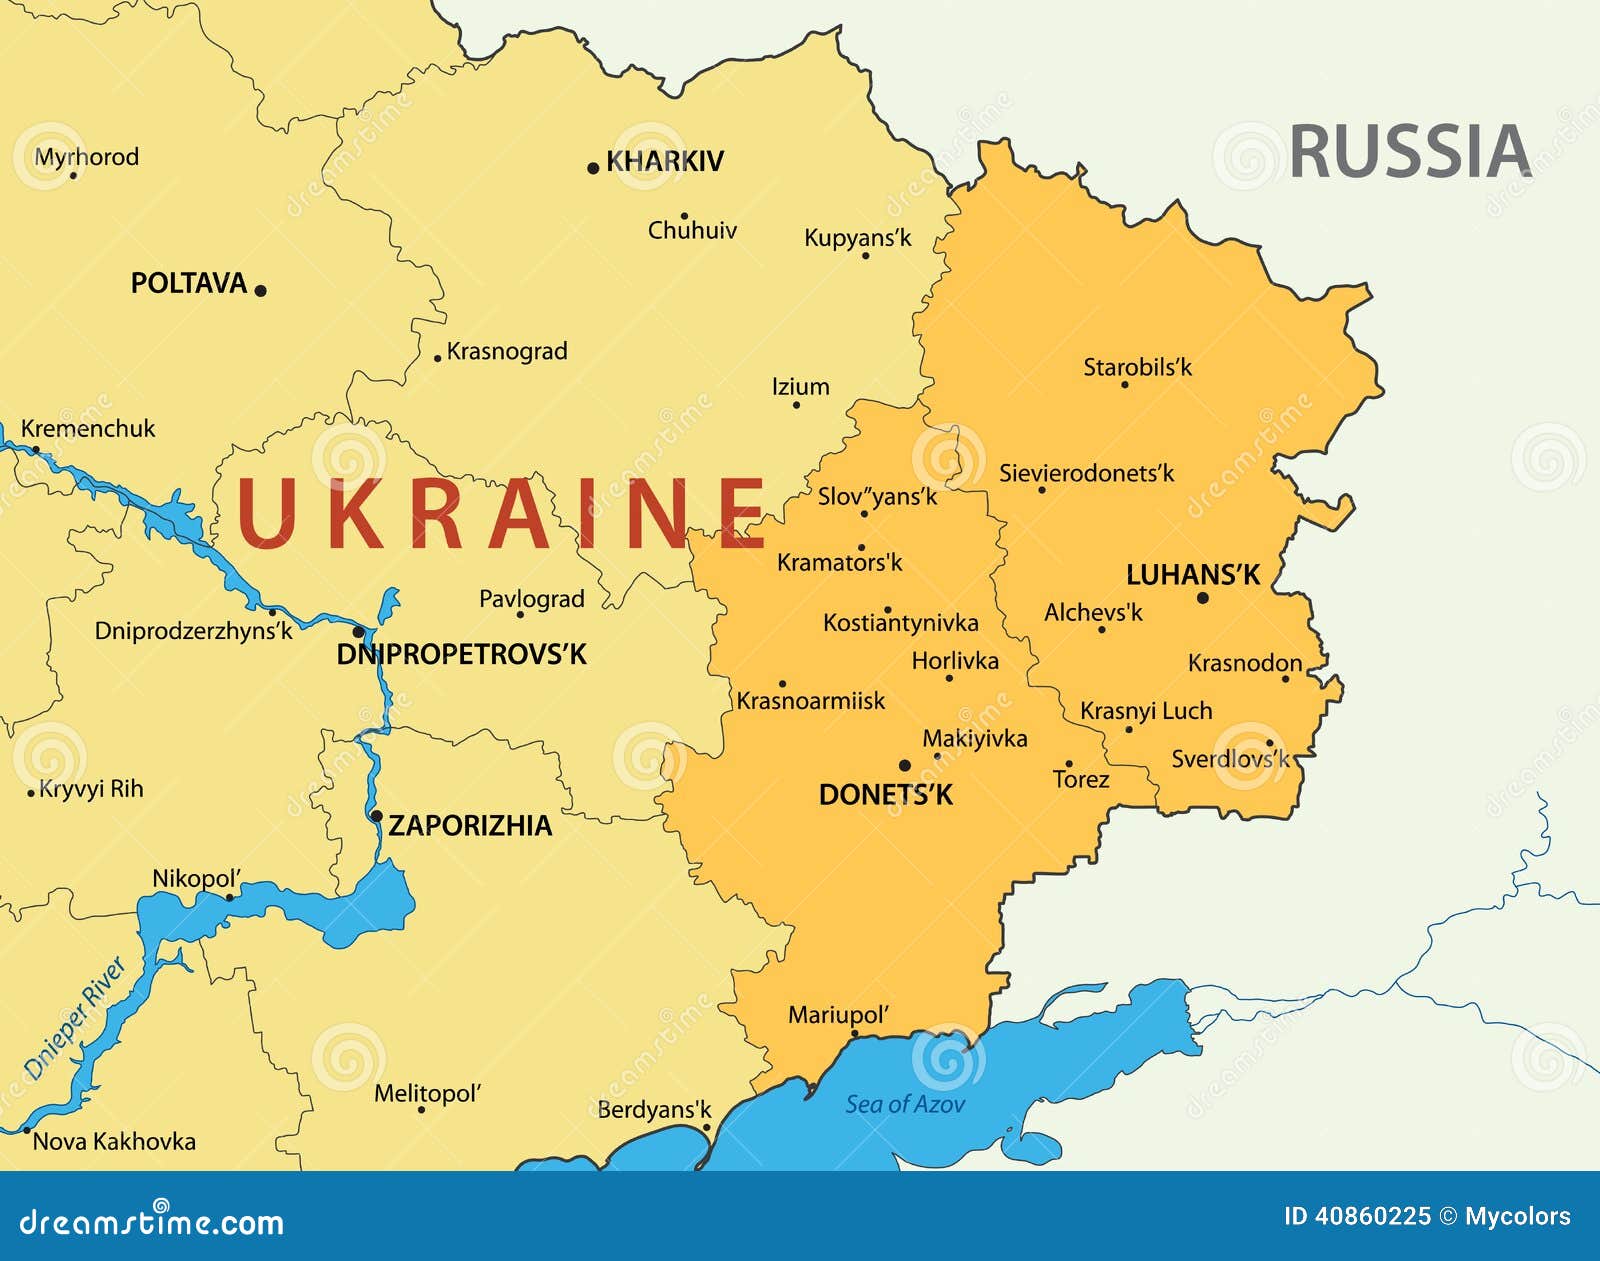 donetsk and lugansk region of ukraine -  map